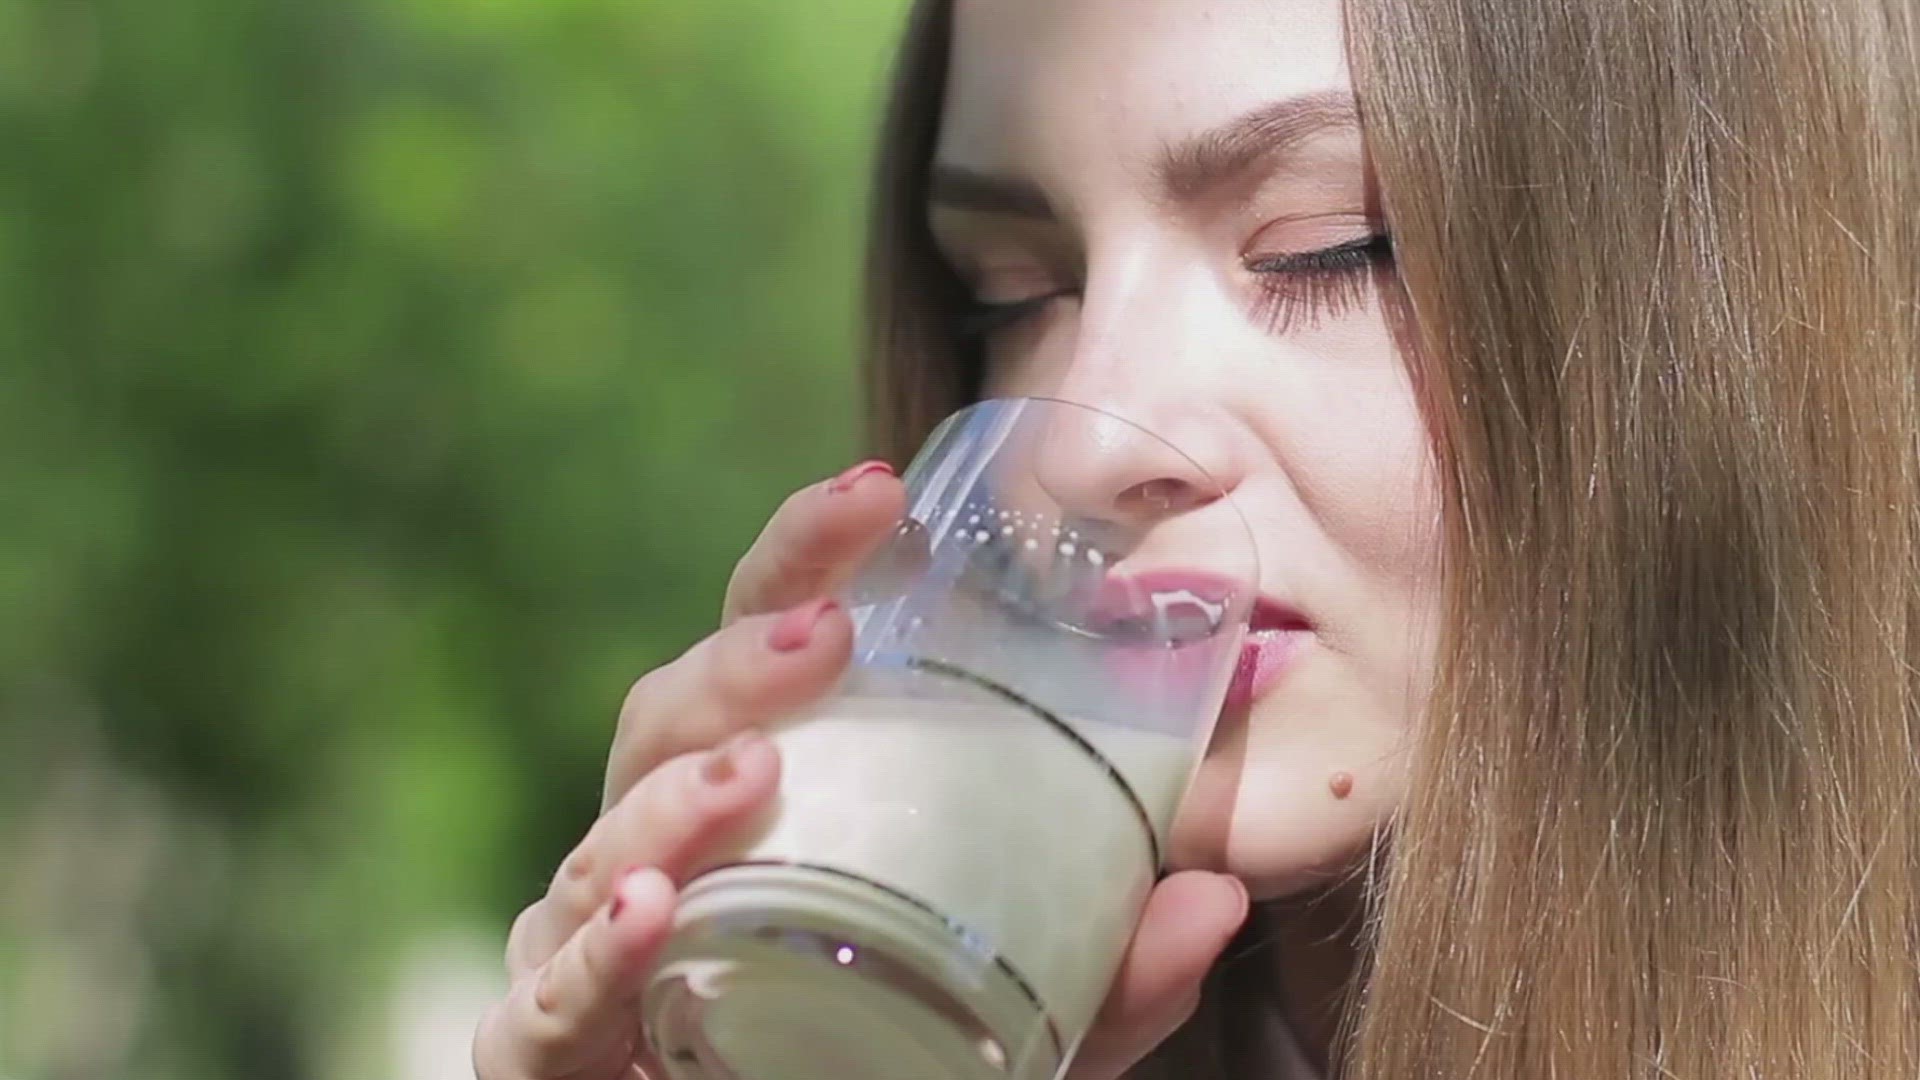 Veuer's Elizabeth Keatinge takes us through the different milk alternative options.